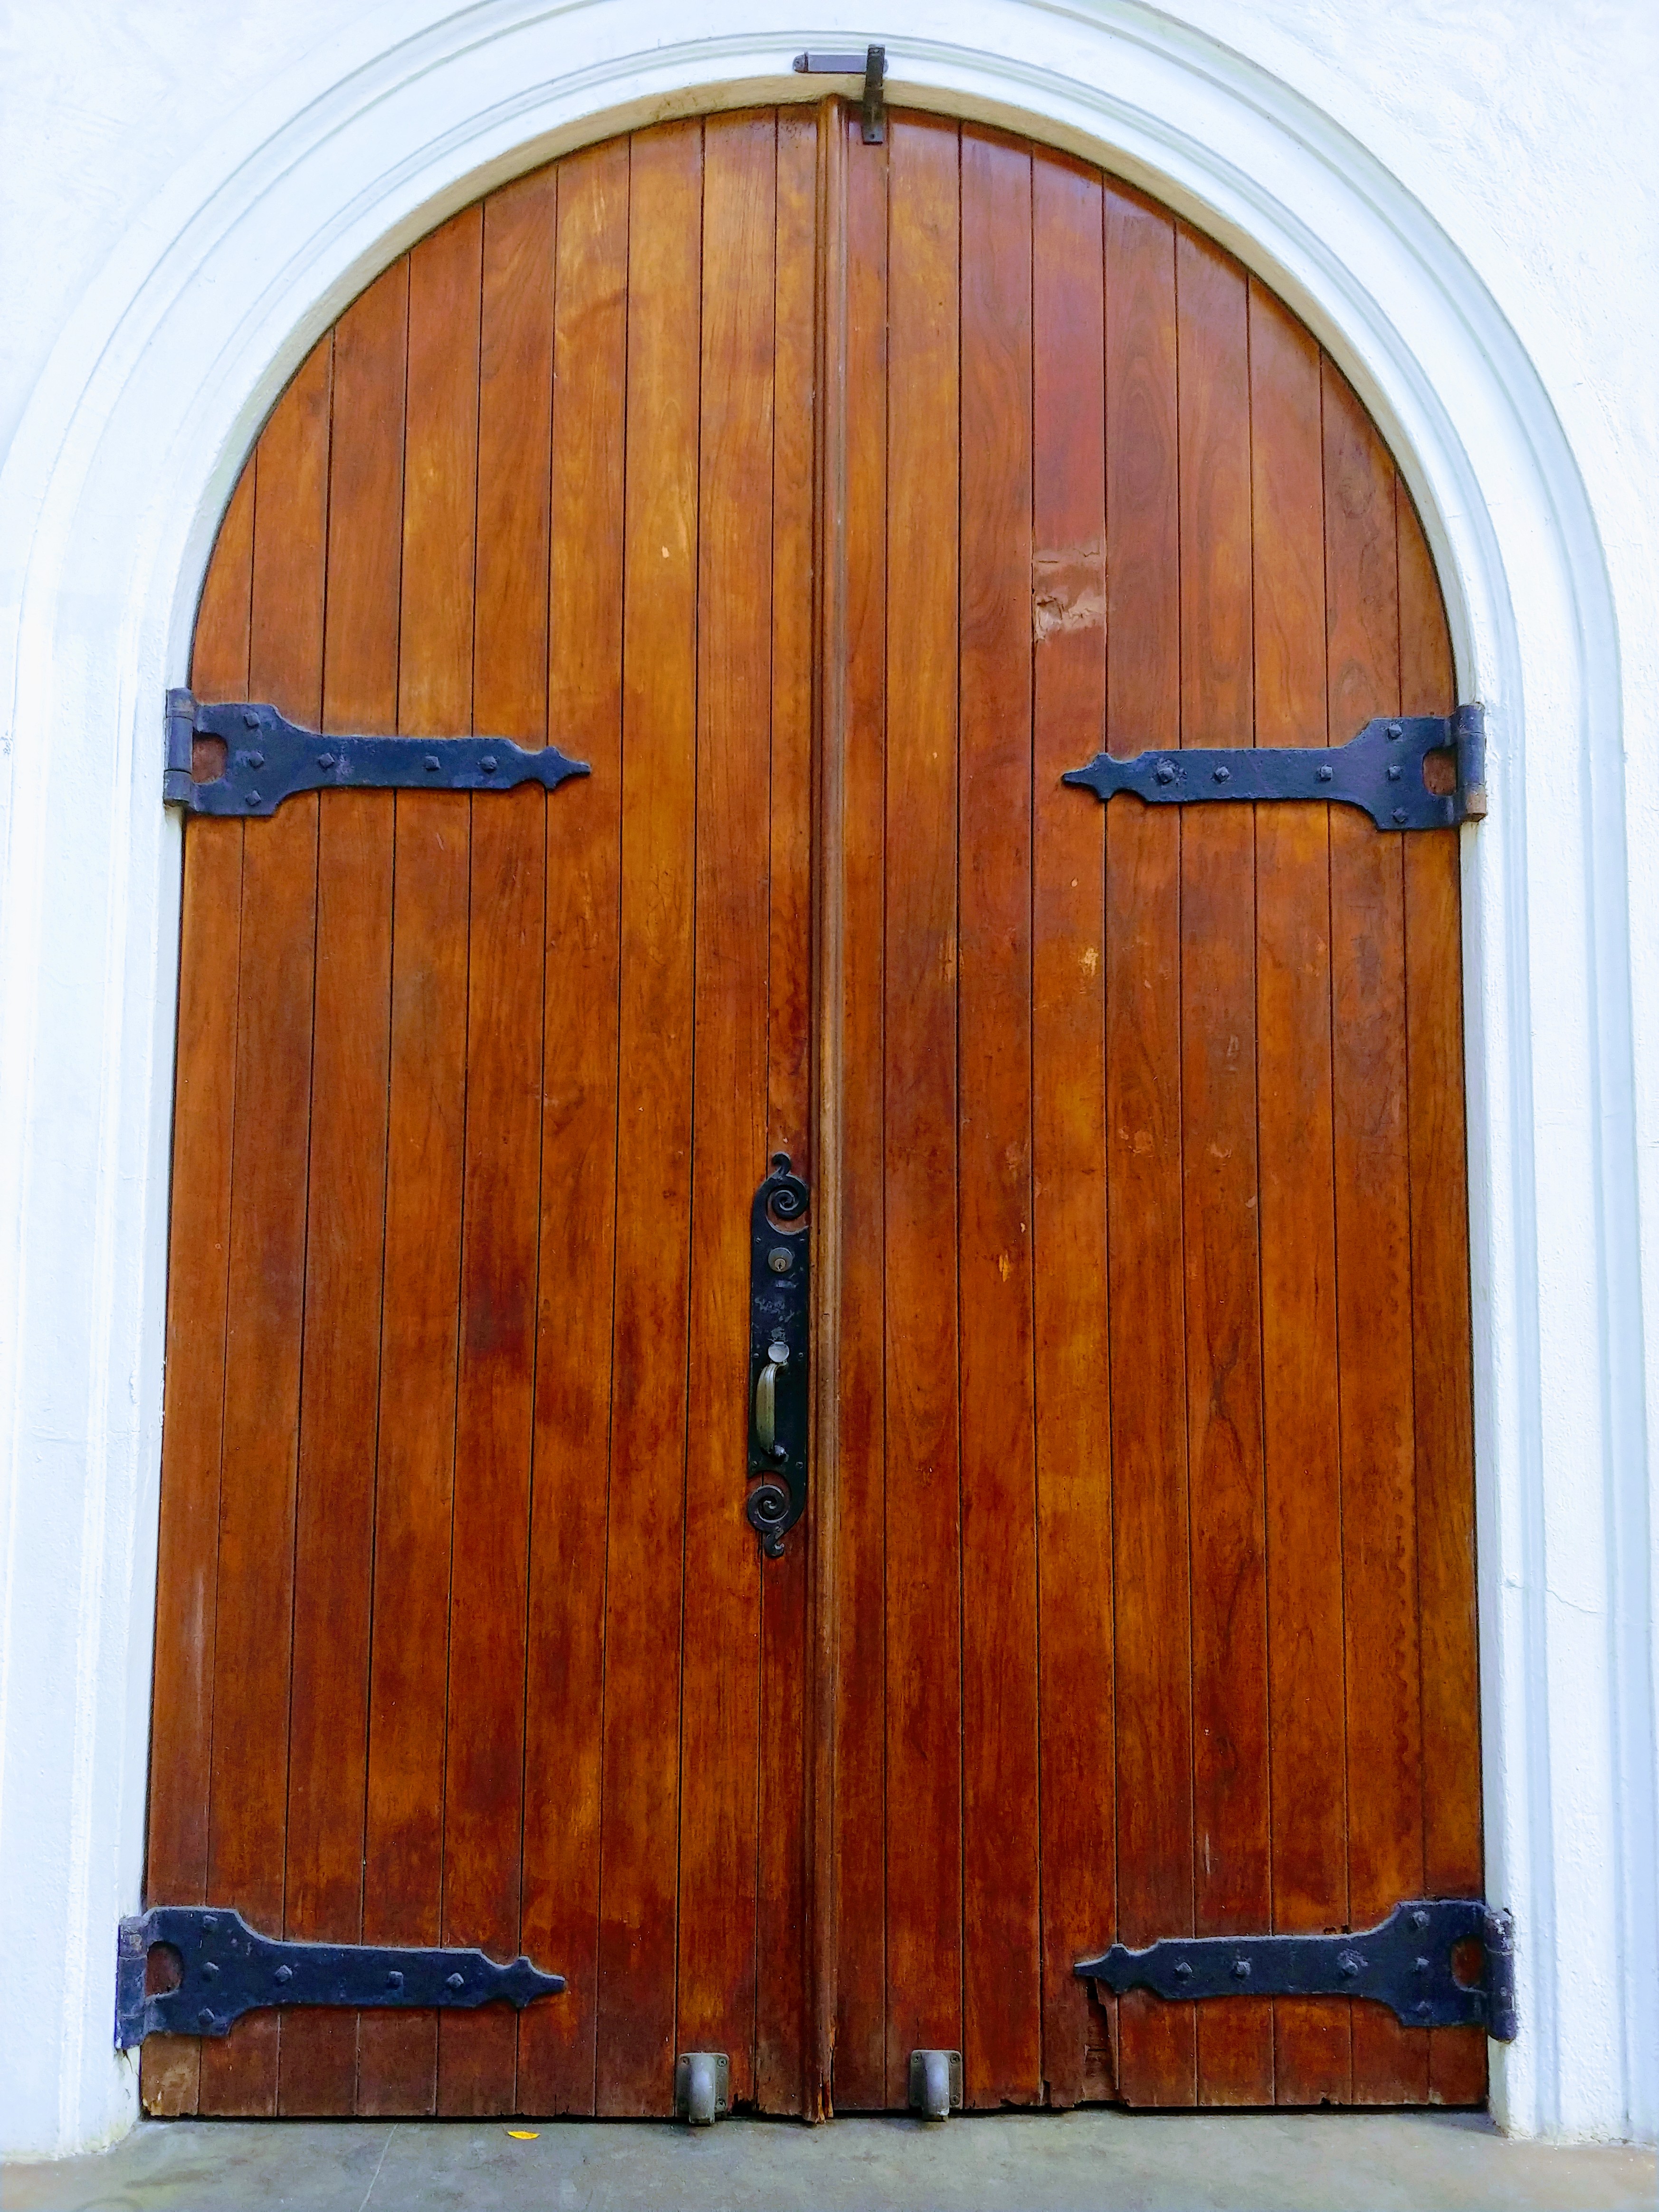 Old Church Doors - Waikiki, Hawaii